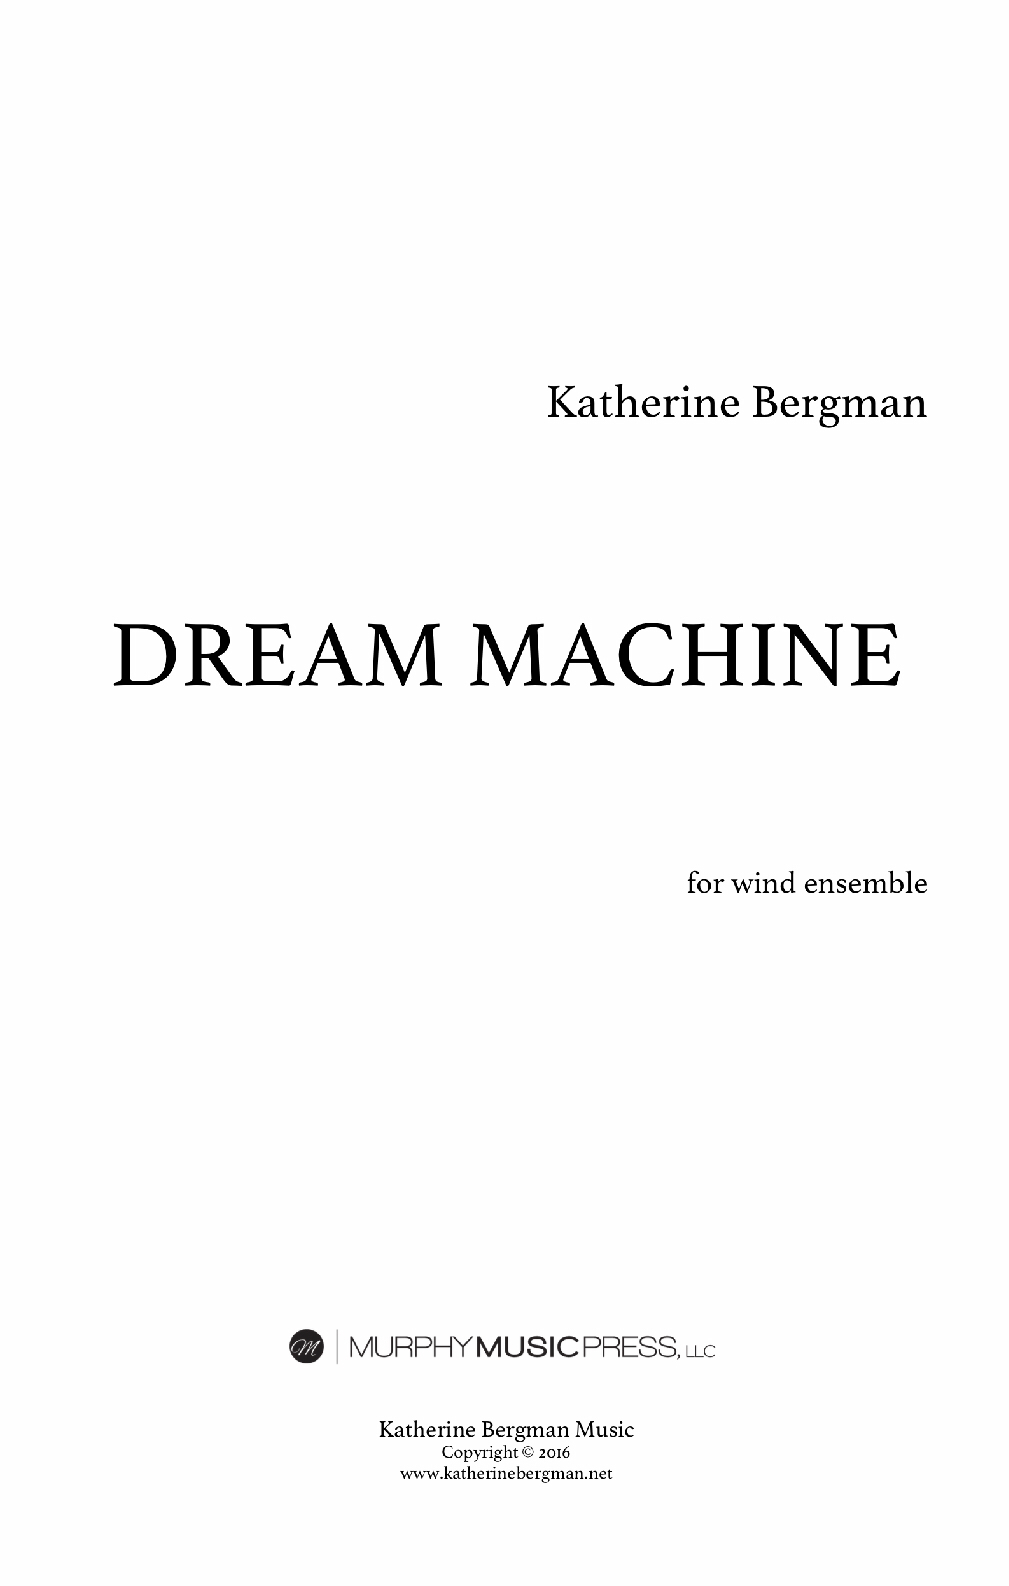 Dream Machine by Katherine Bergman